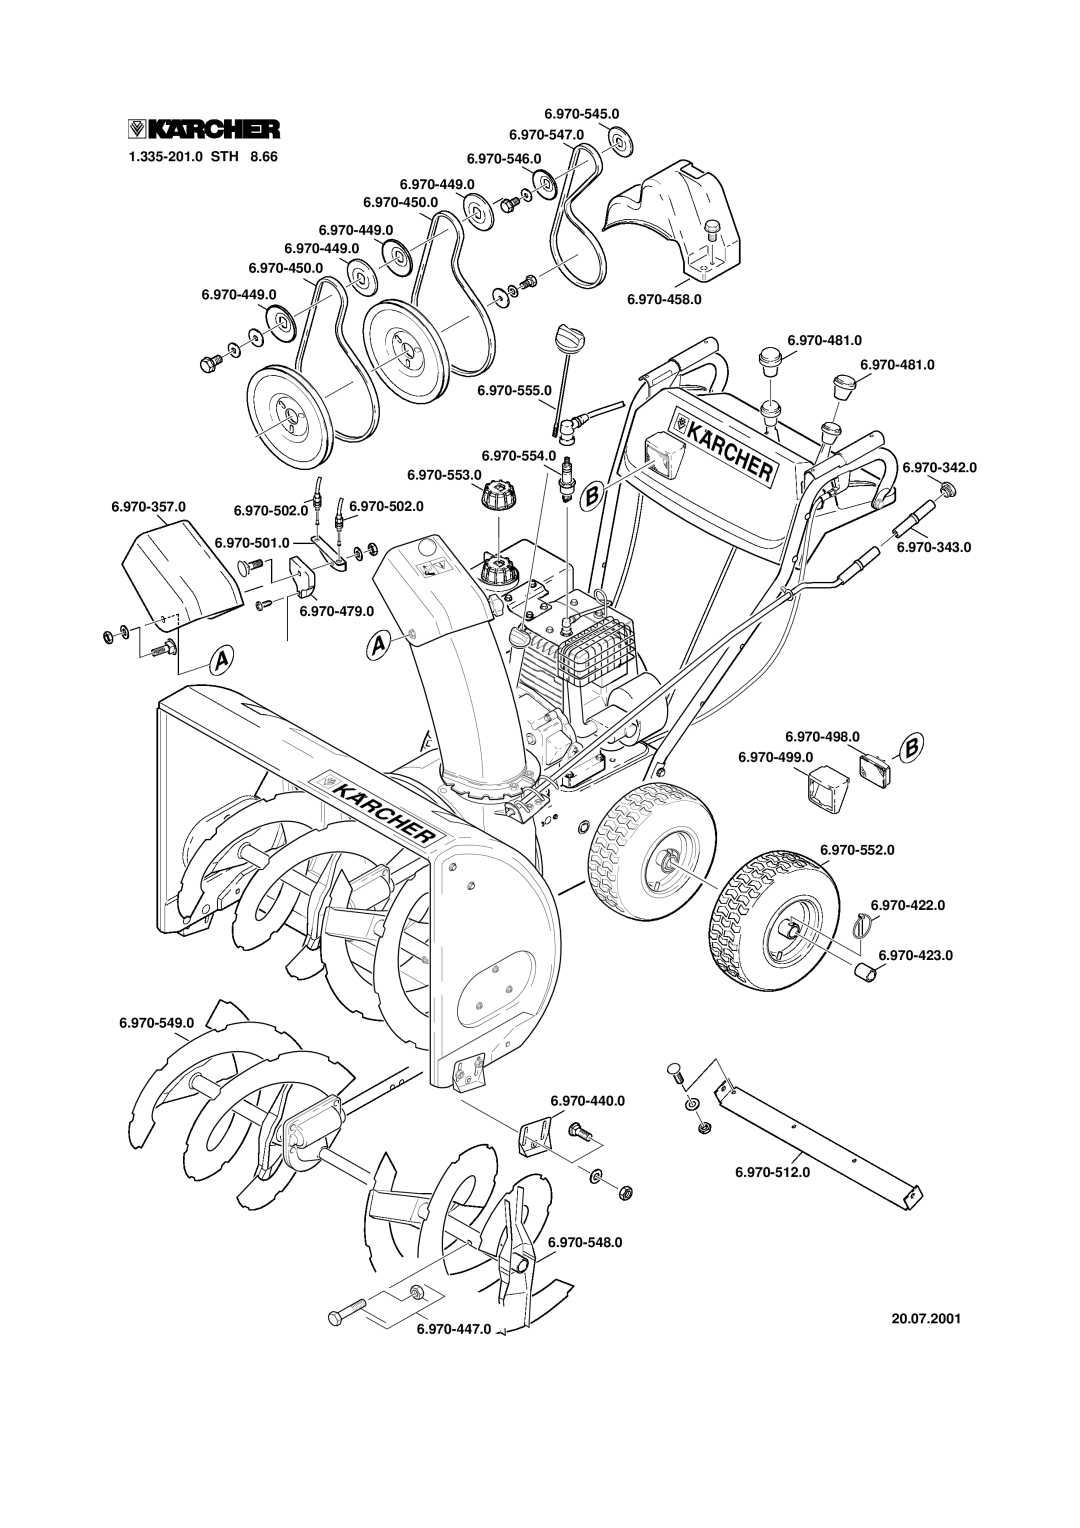 Karcher STH 953 manual A A, Karcher 